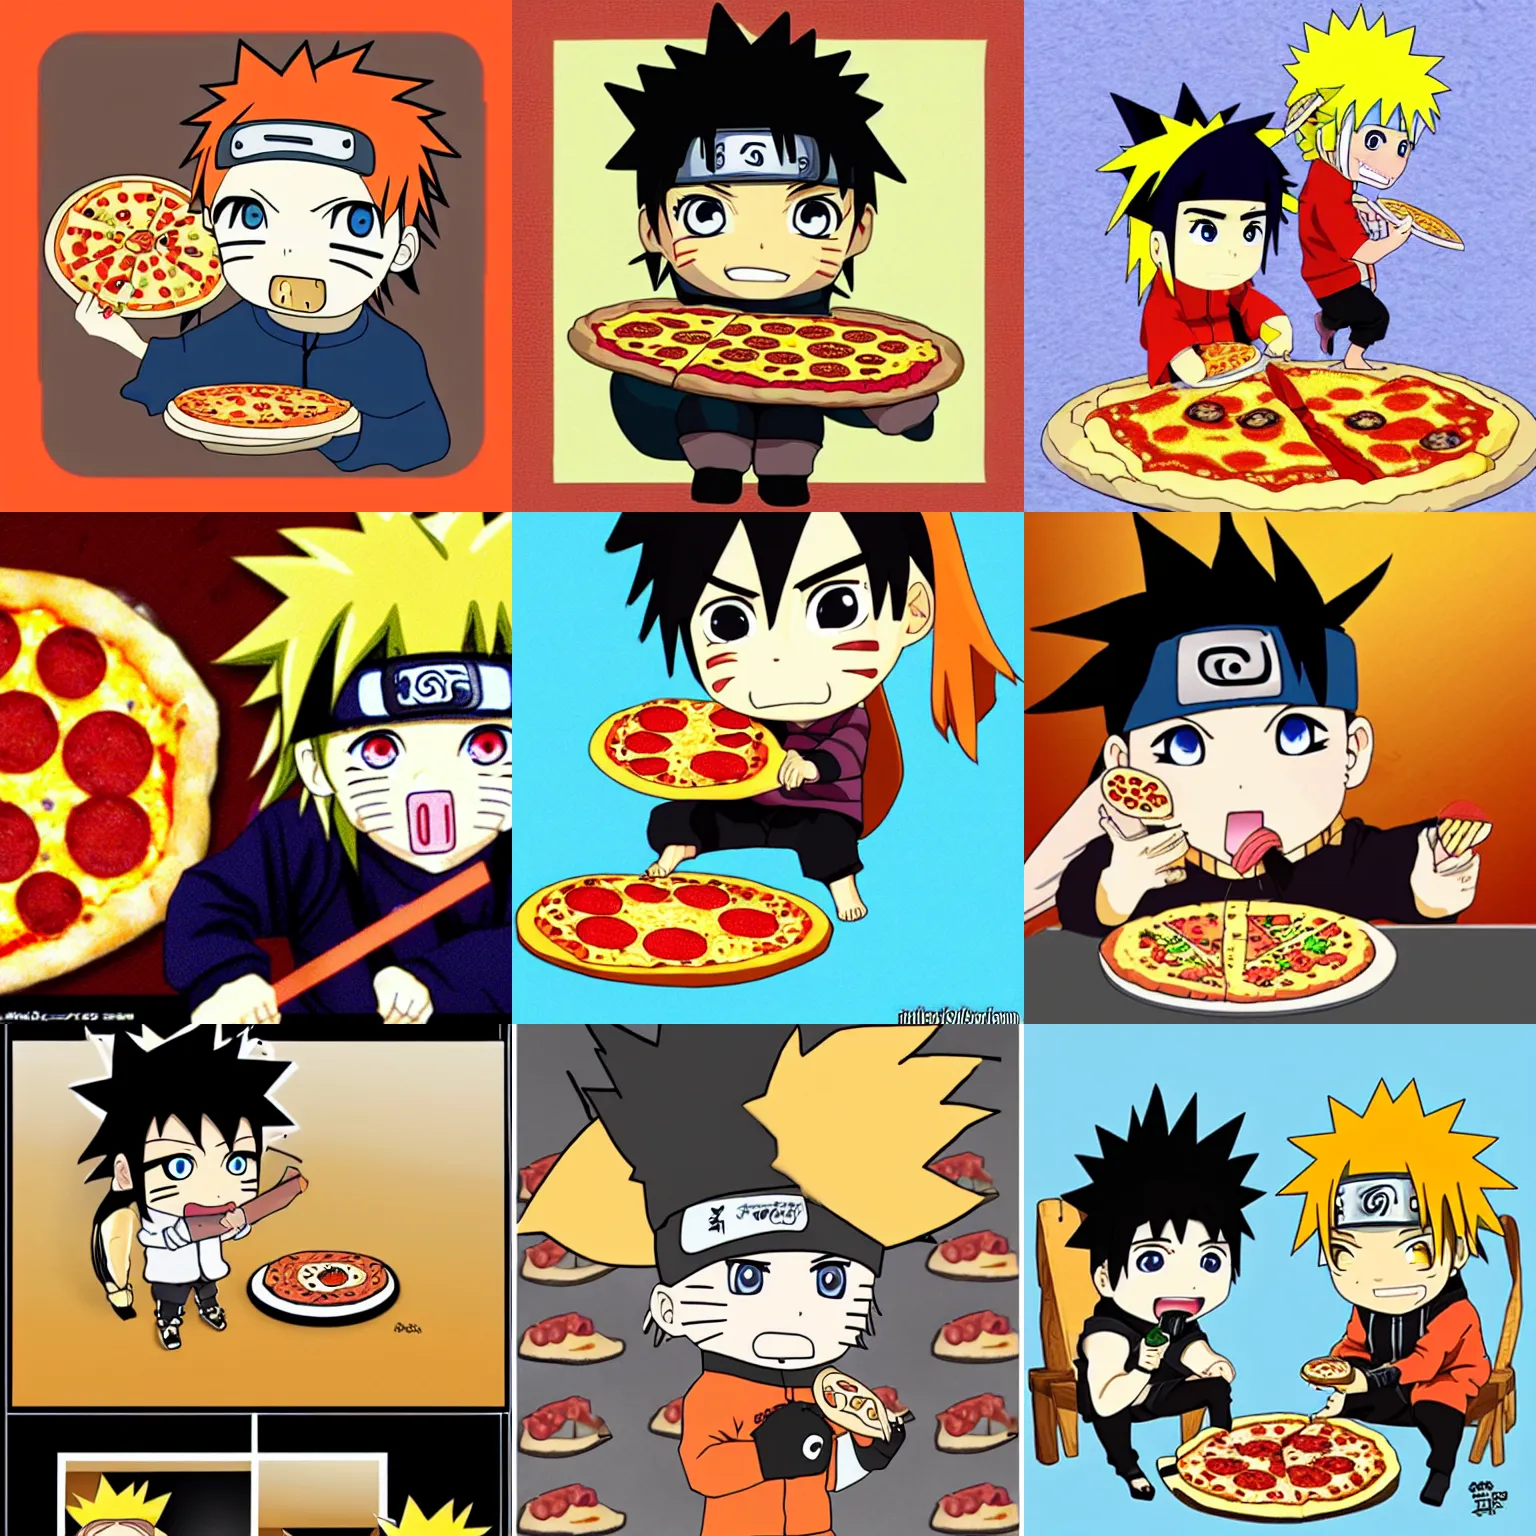 Prompt: Chibi Naruto eating pizza